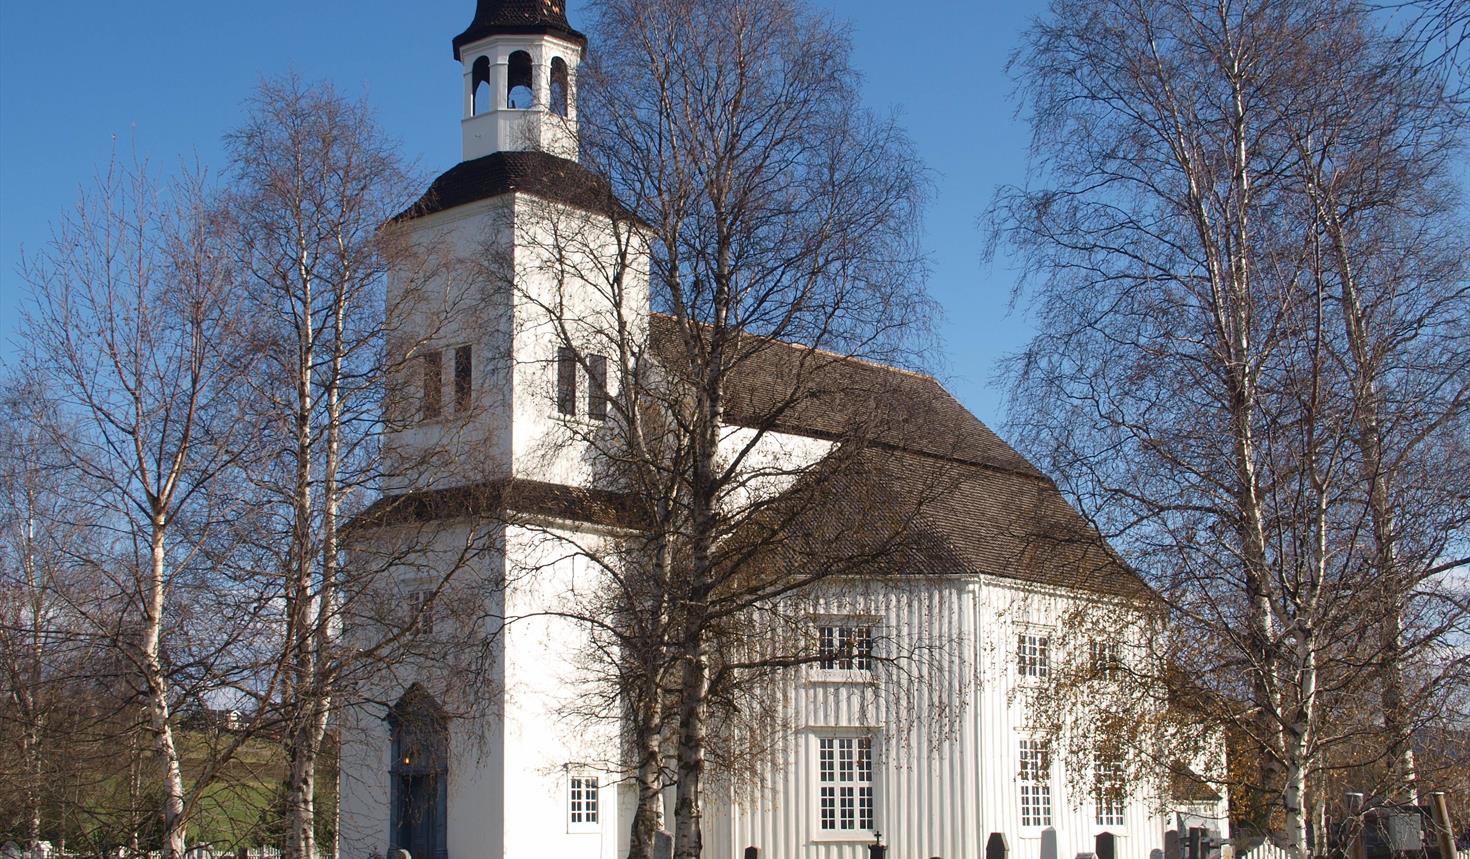 Tynset Church